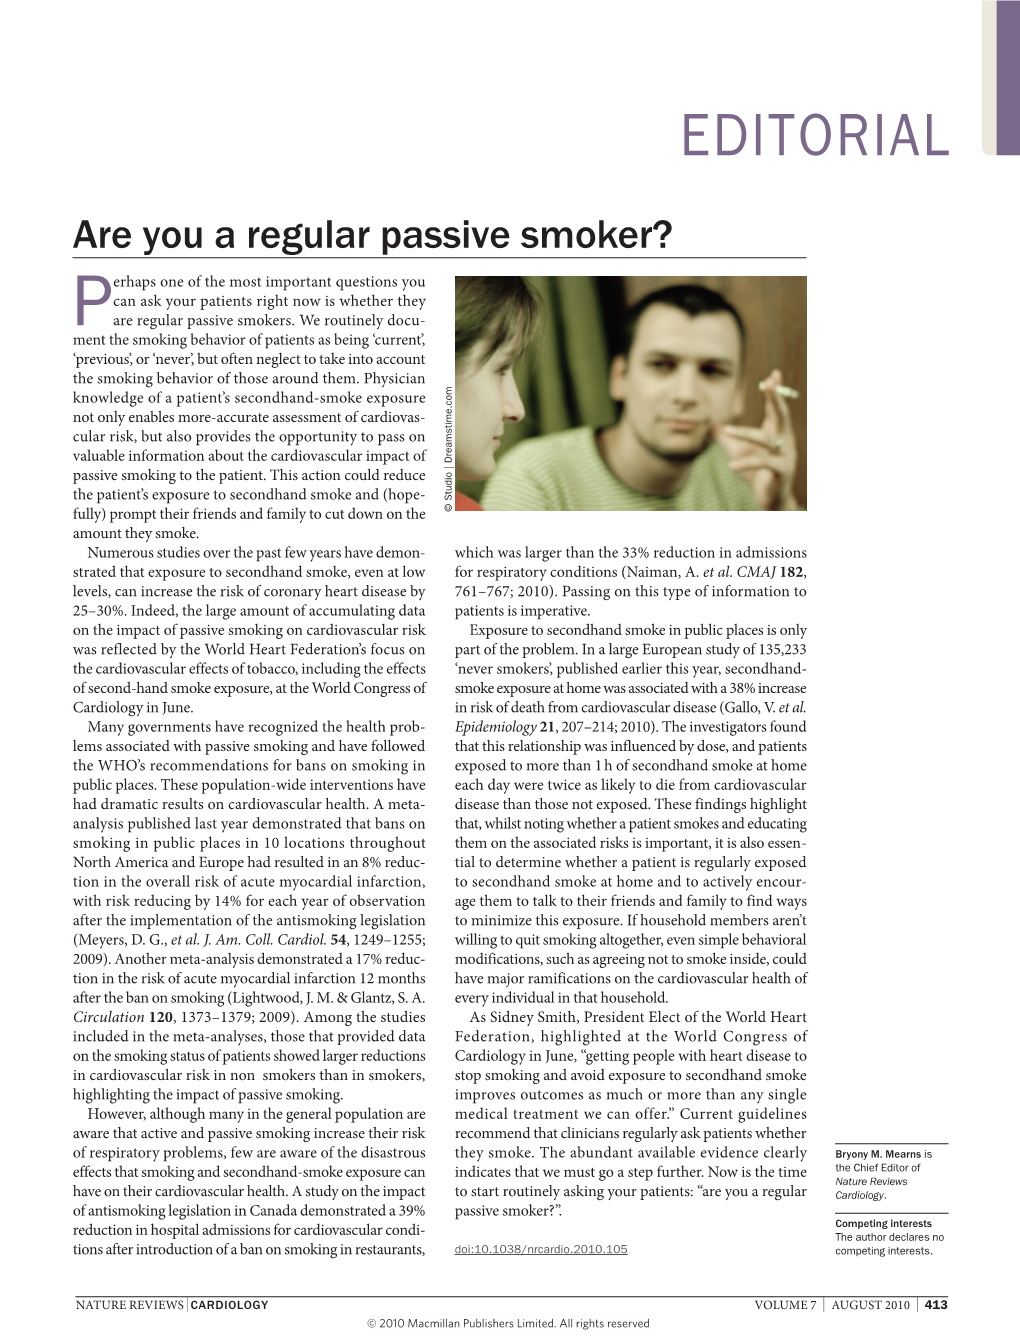 Are You a Regular Passive Smoker?